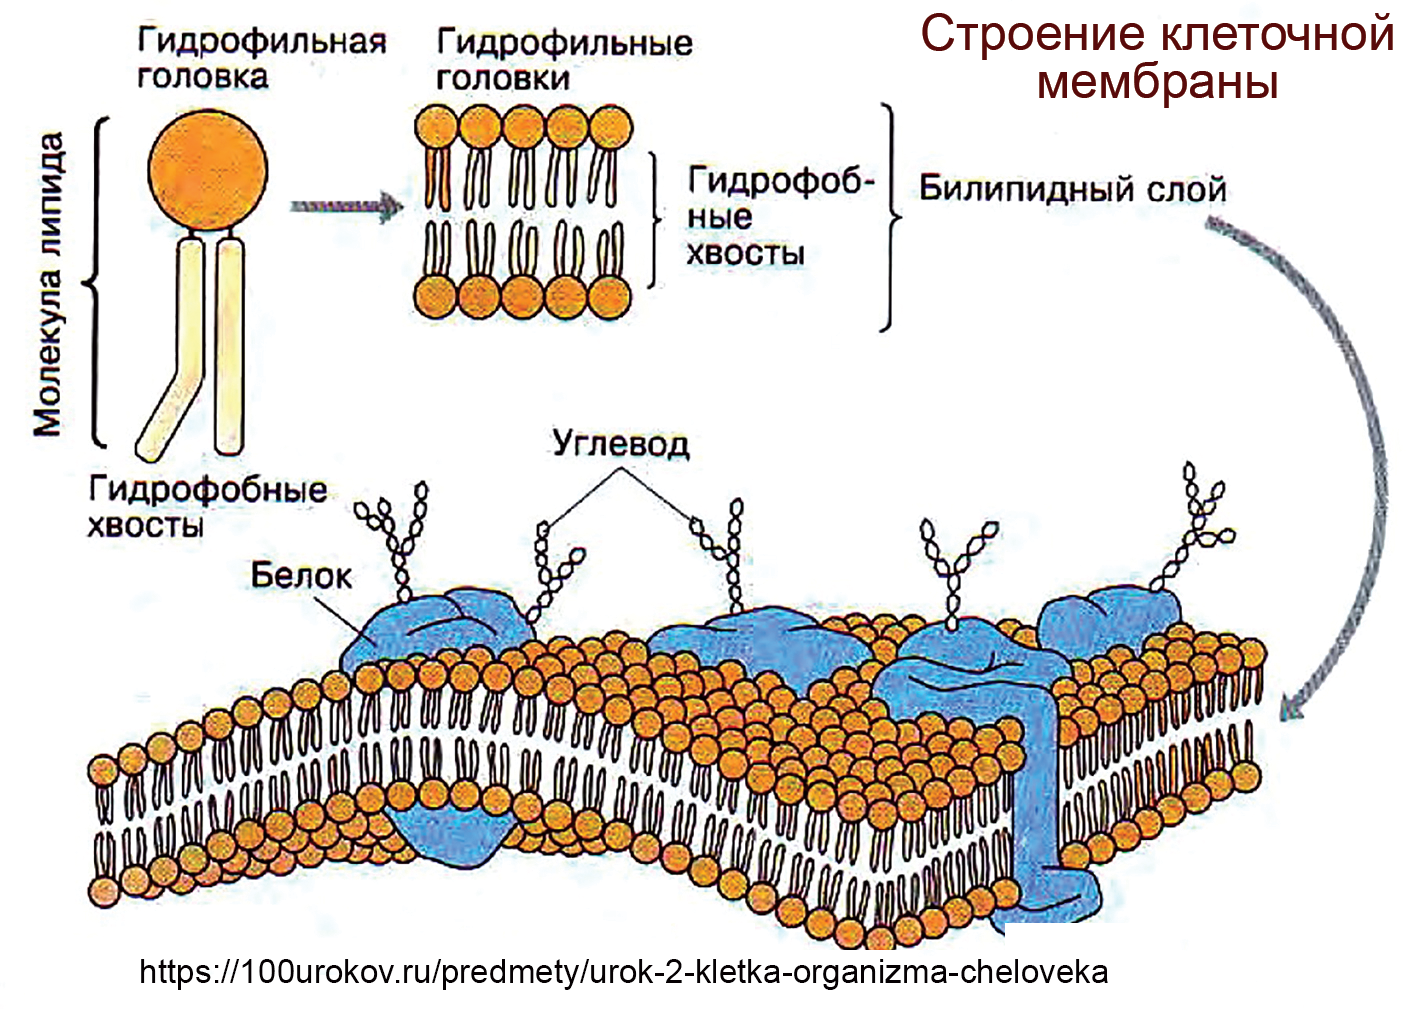 Мембраны клеток эукариот. Структура клетки плазматическая мембрана. Схема строения плазматической мембраны клетки. Строение фосфолипидов клеточной мембраны. Структура клеточной мембраны плазматическая мембрана.